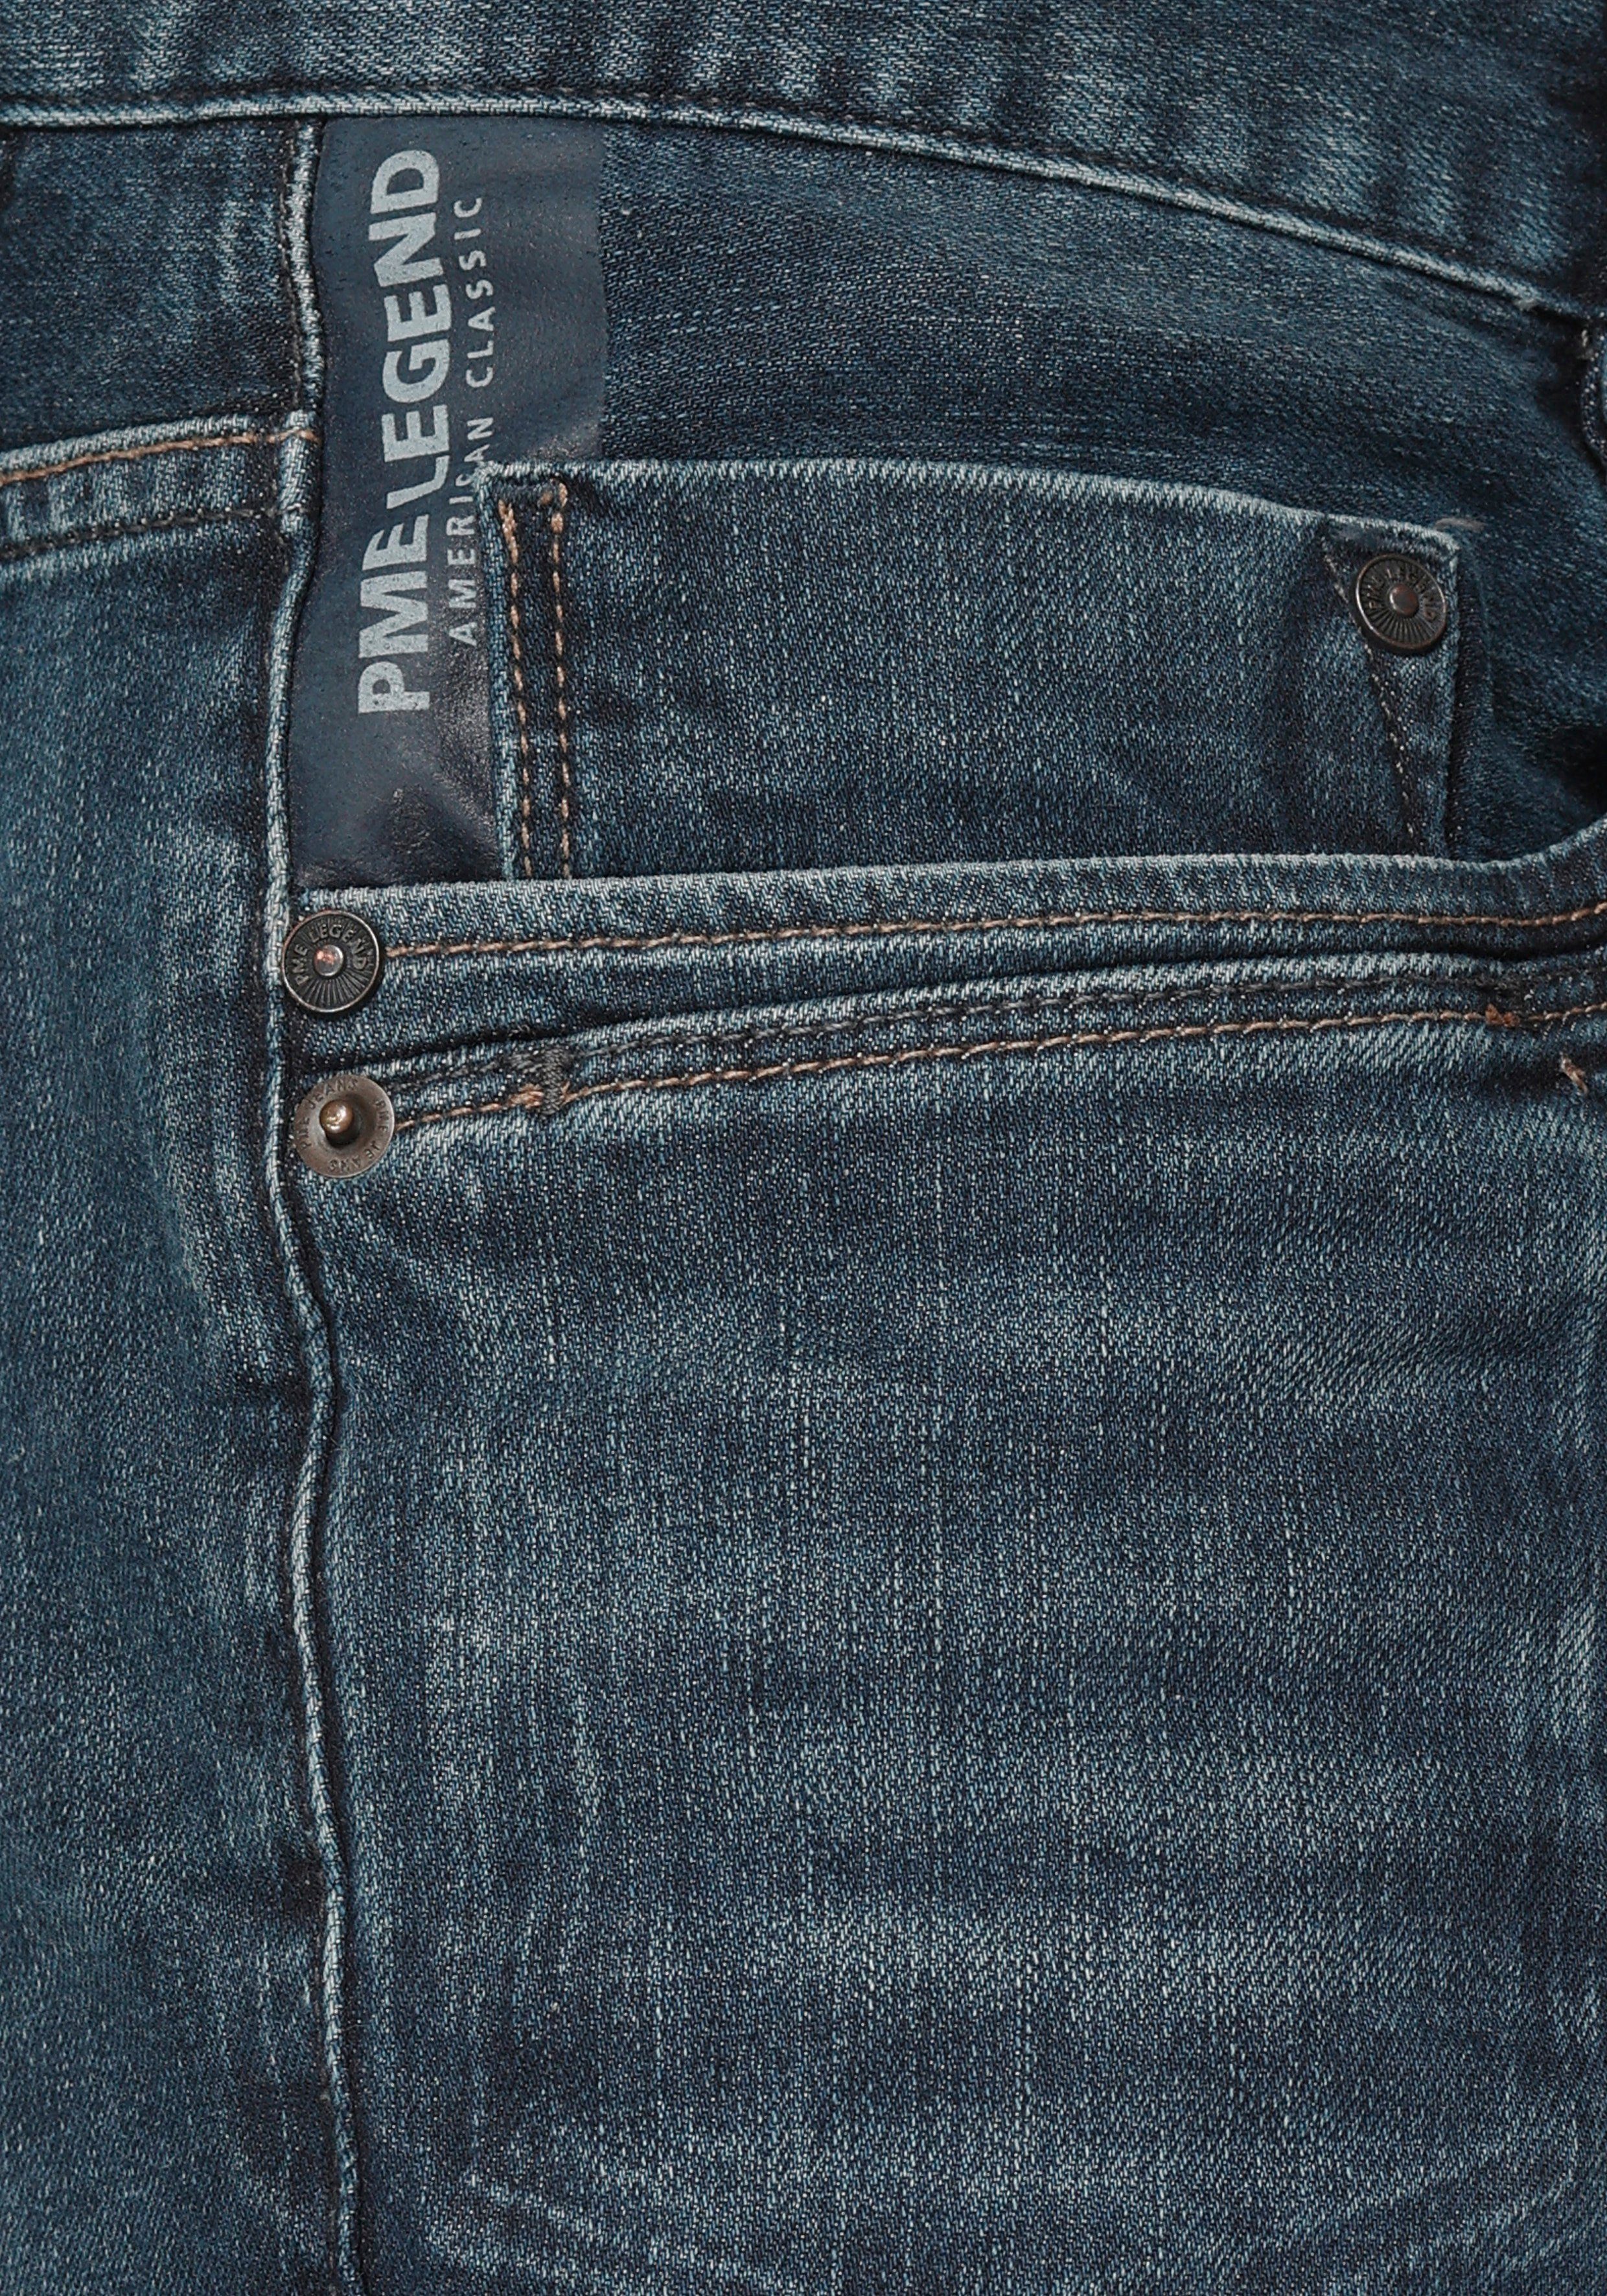 dark-indigo SKYMASTER Tapered-fit-Jeans PME LEGEND Used Look im